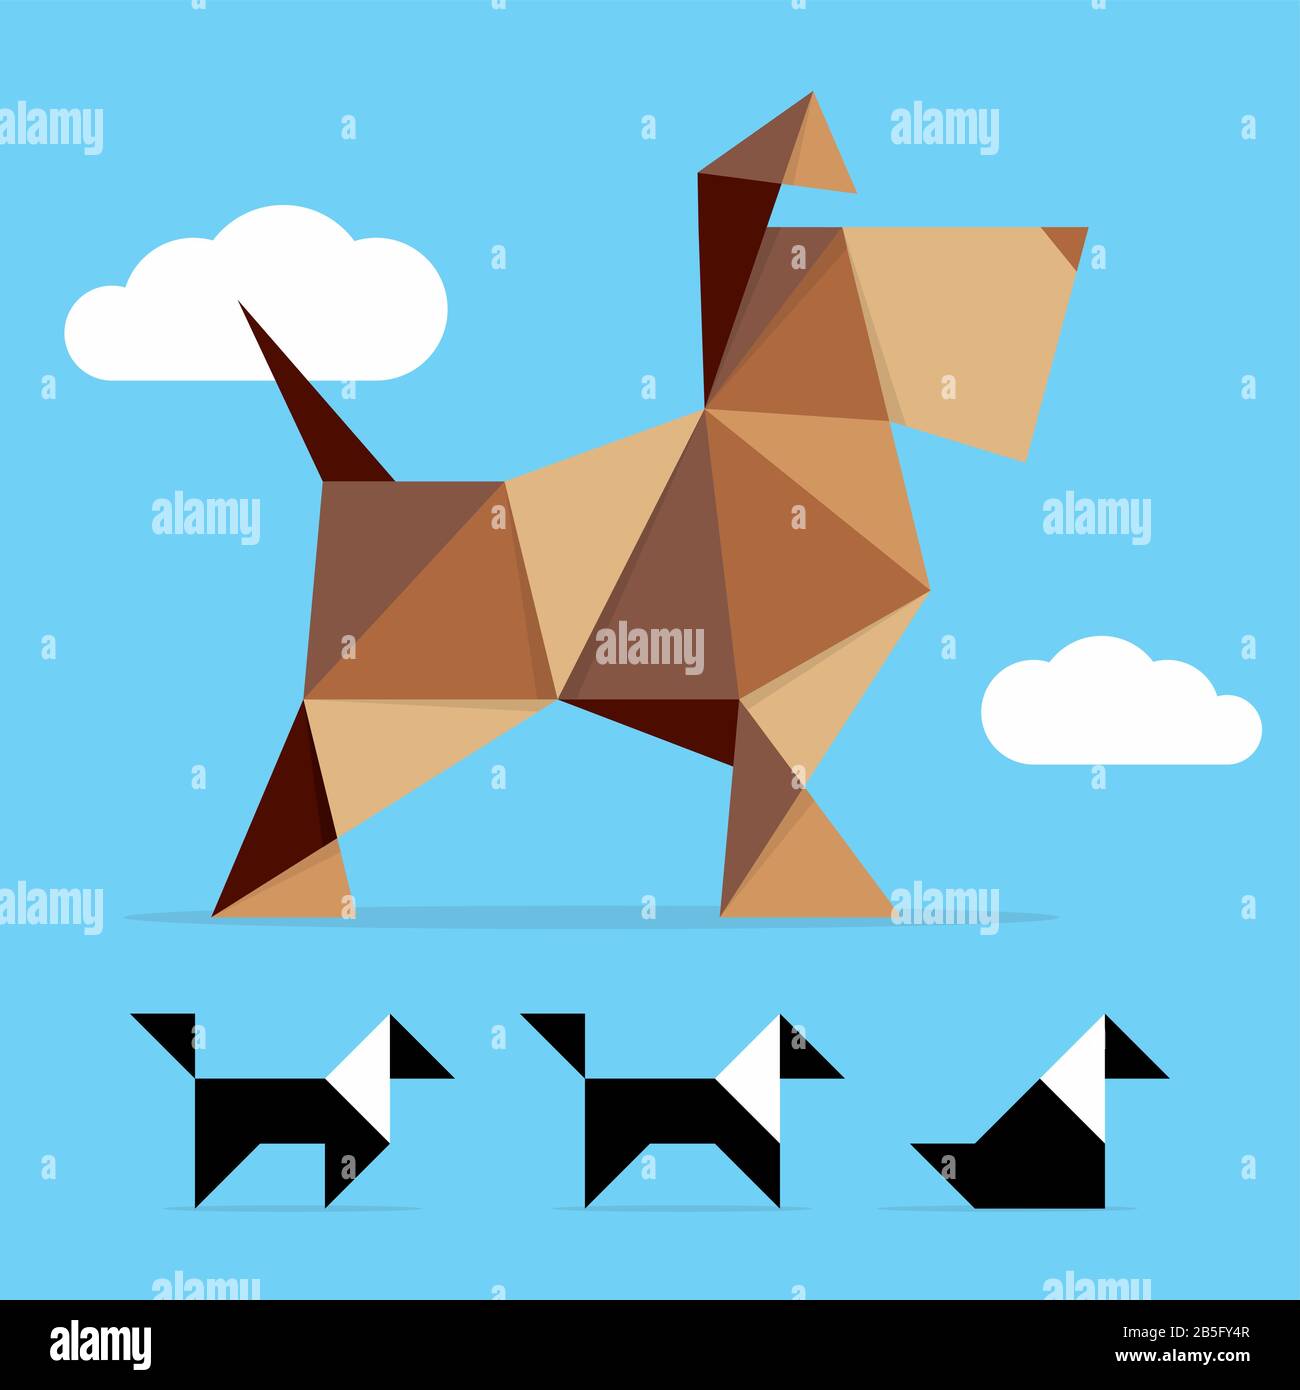 Beautiful Dog (Schnauzer) Vector Illustration. Pet Shop Symbol Logo. Animal icon Polygonal illustration. Elegant Identity Concept Design Idea Template Stock Vector